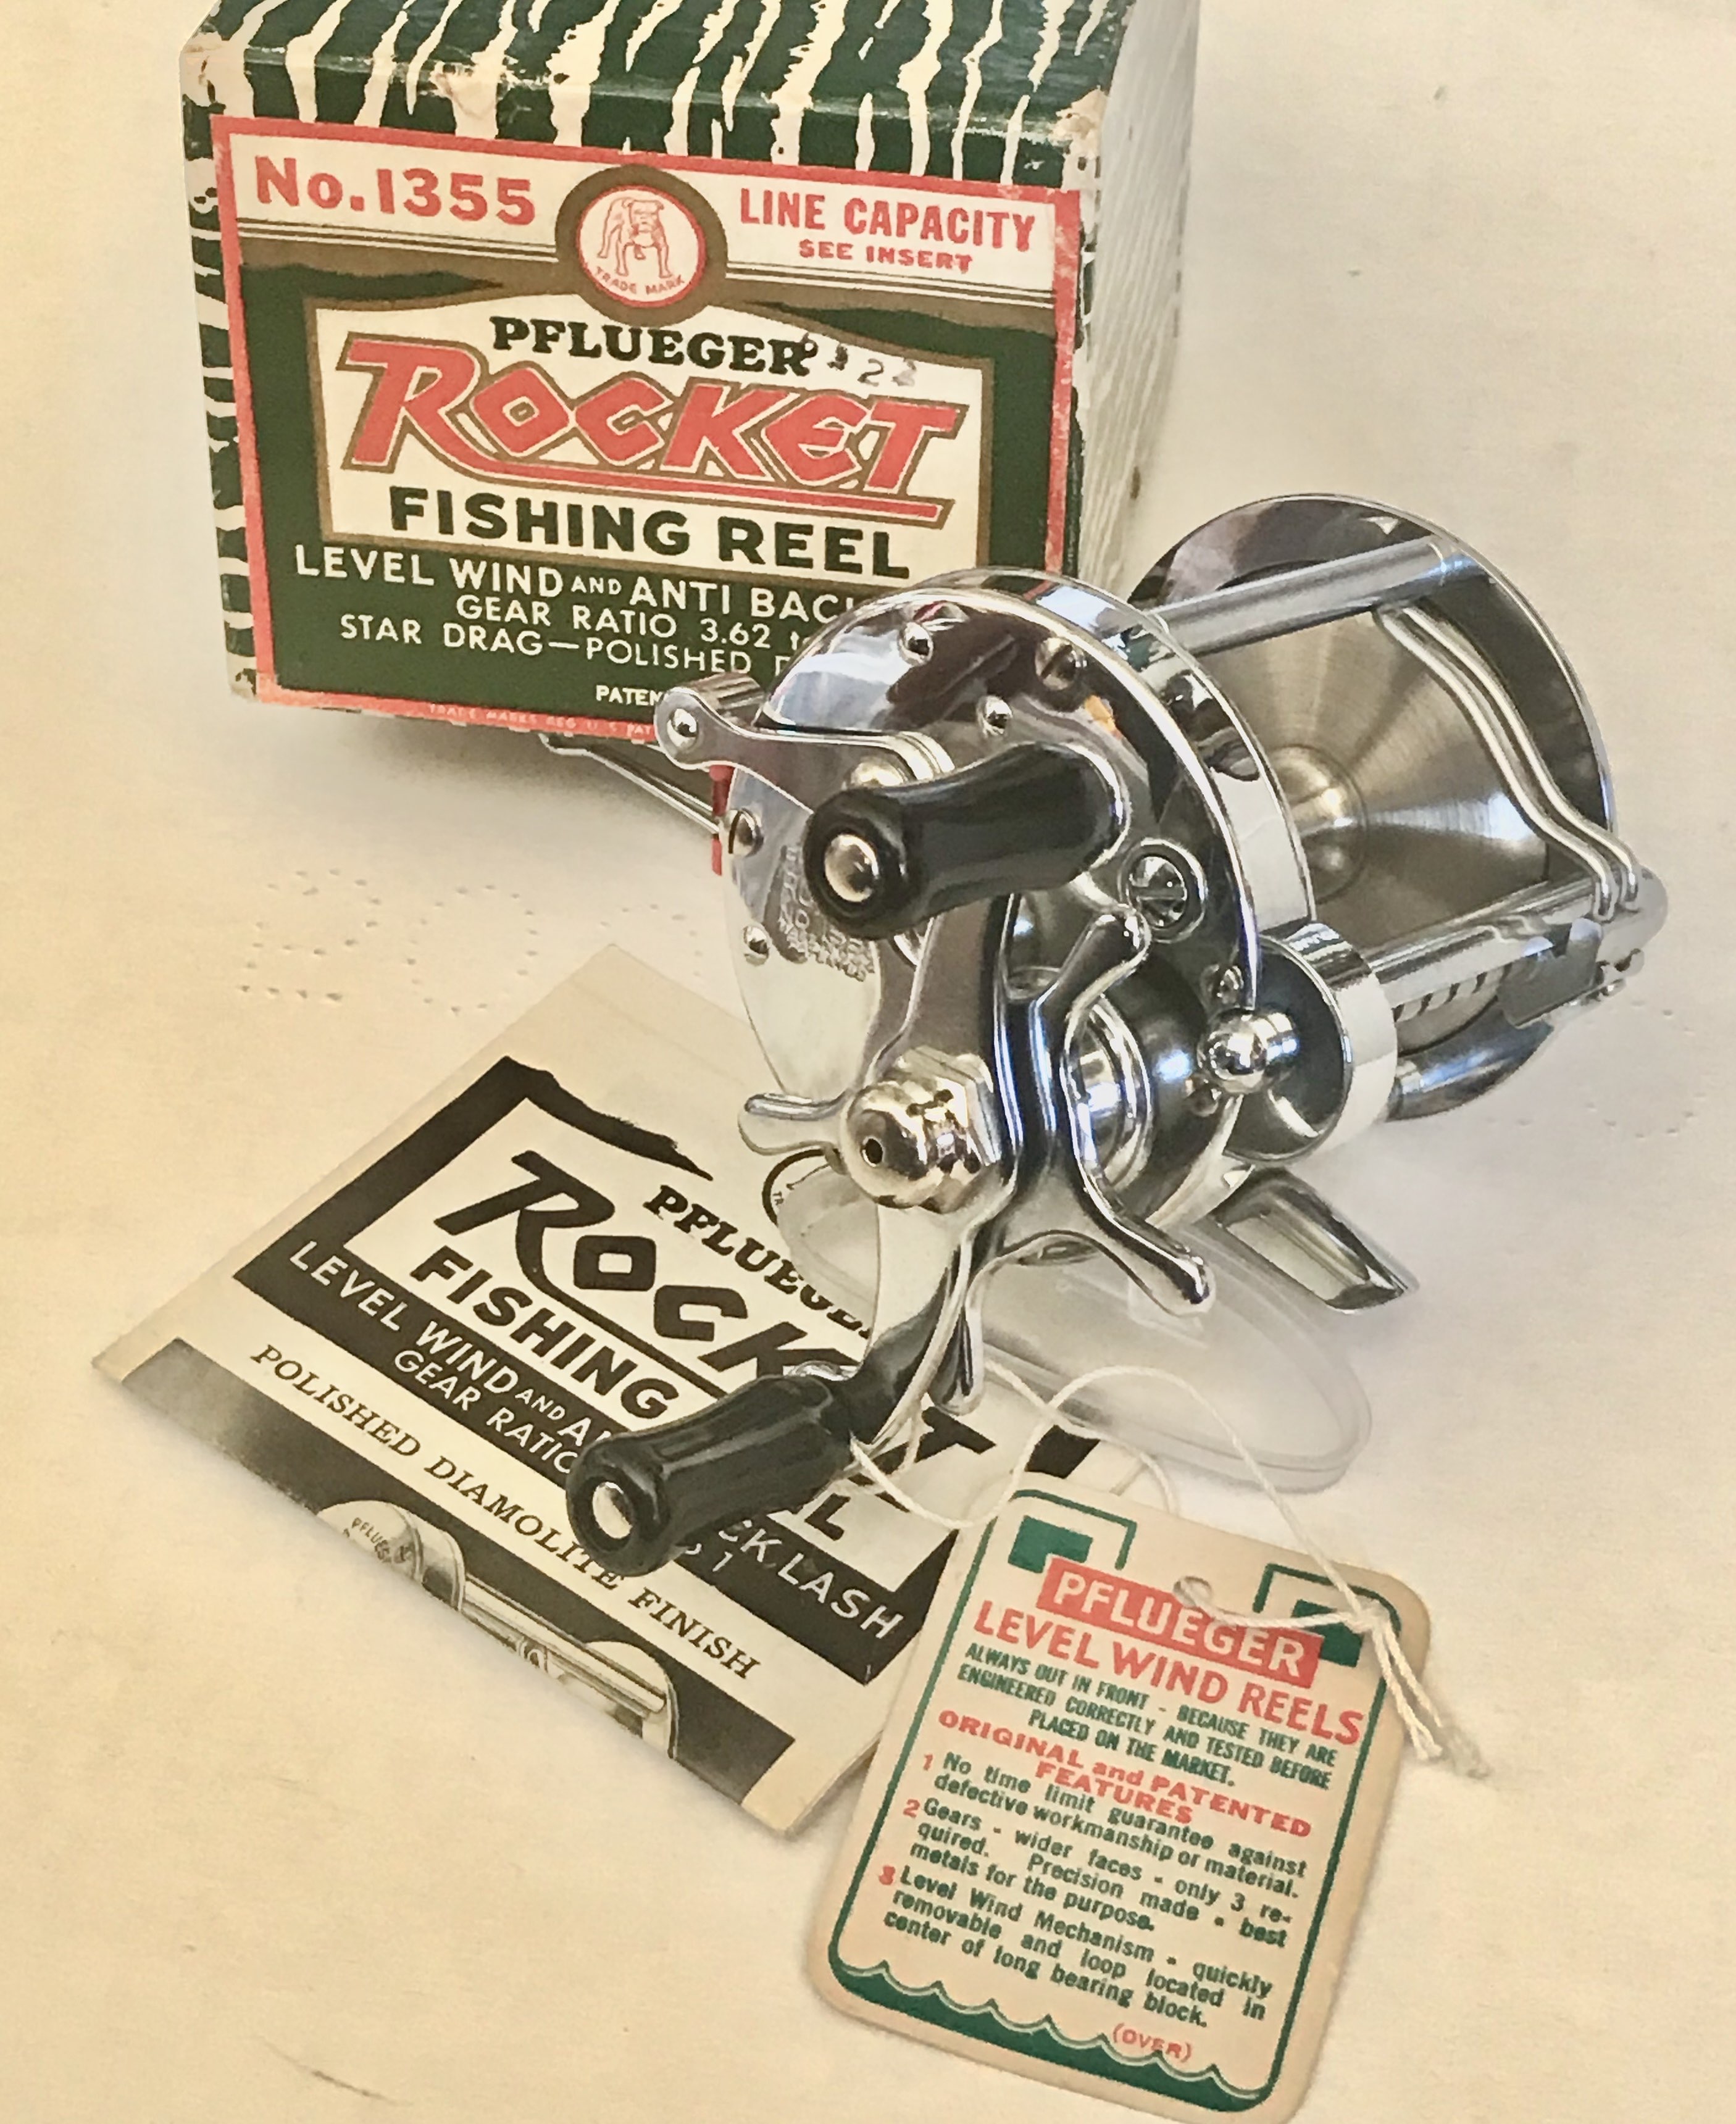 Pflueger ROCKET No. 1355-L Light Spool Level Wind ABL Star Drag with  Original Box, Hangtag, Manual Circa -1954 — VINTAGE FISHING REELS